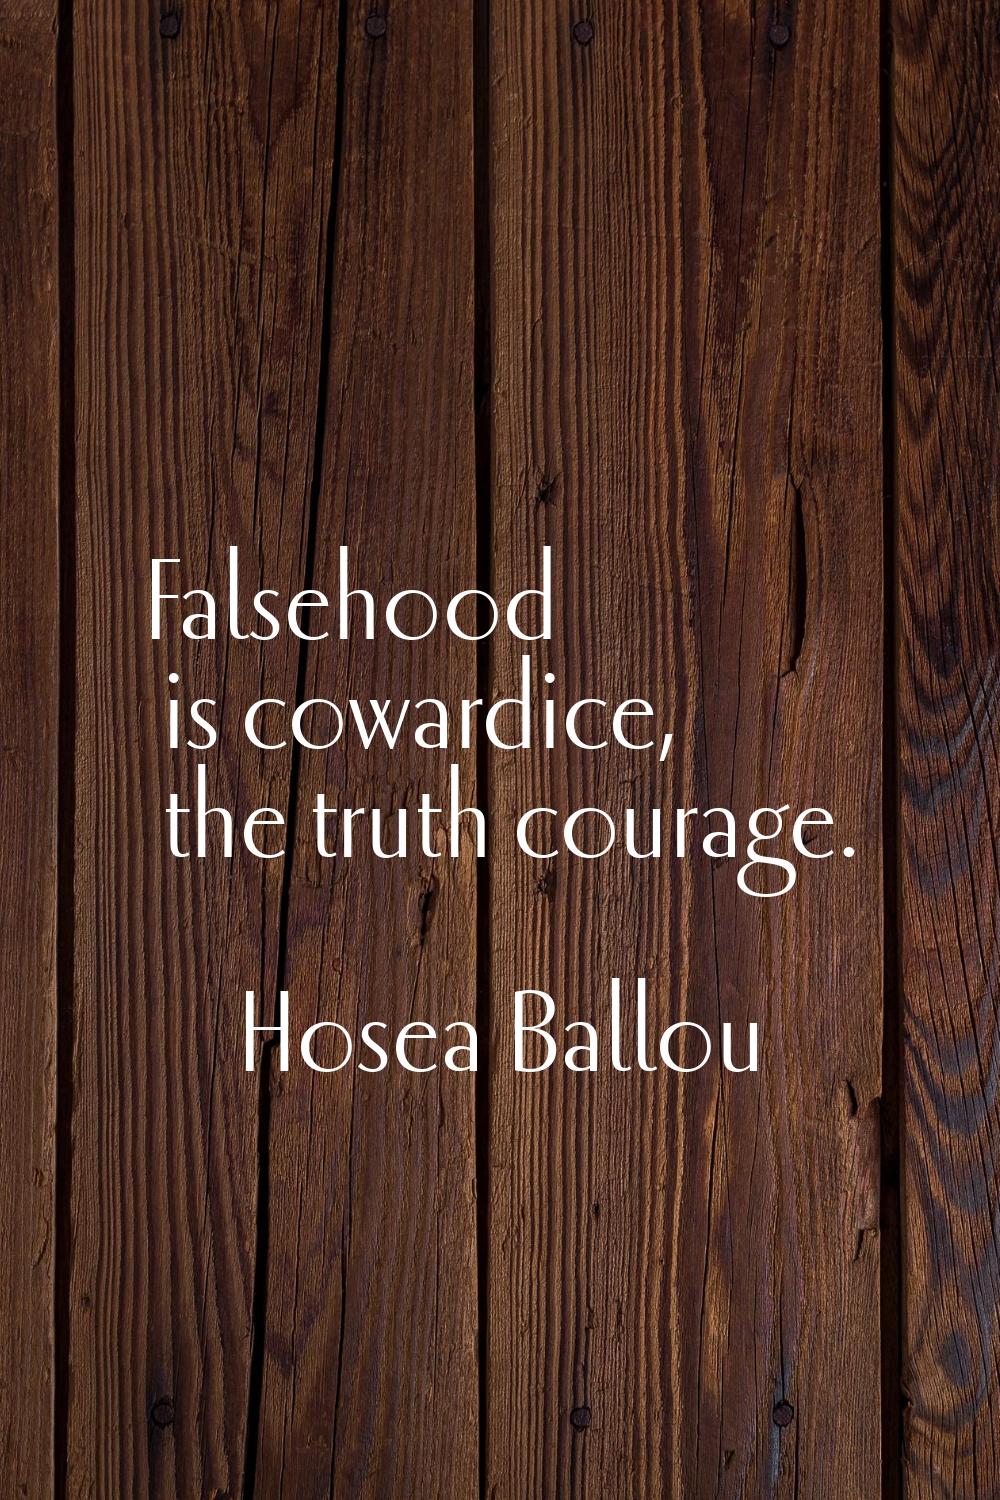 Falsehood is cowardice, the truth courage.